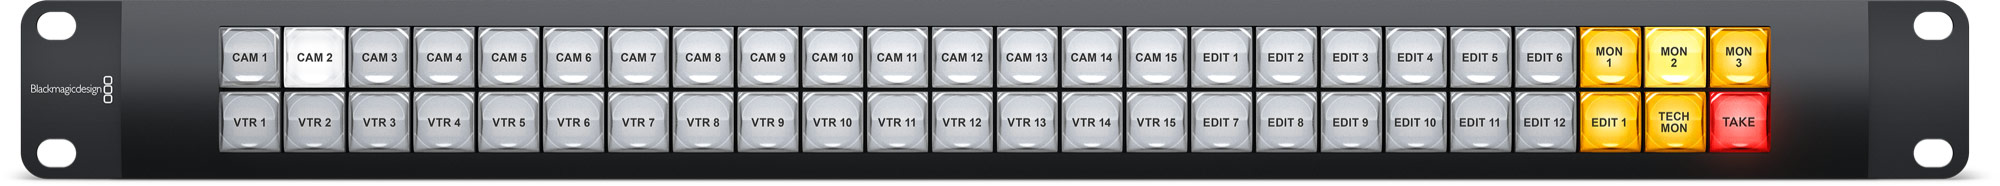 videohub smart control manual